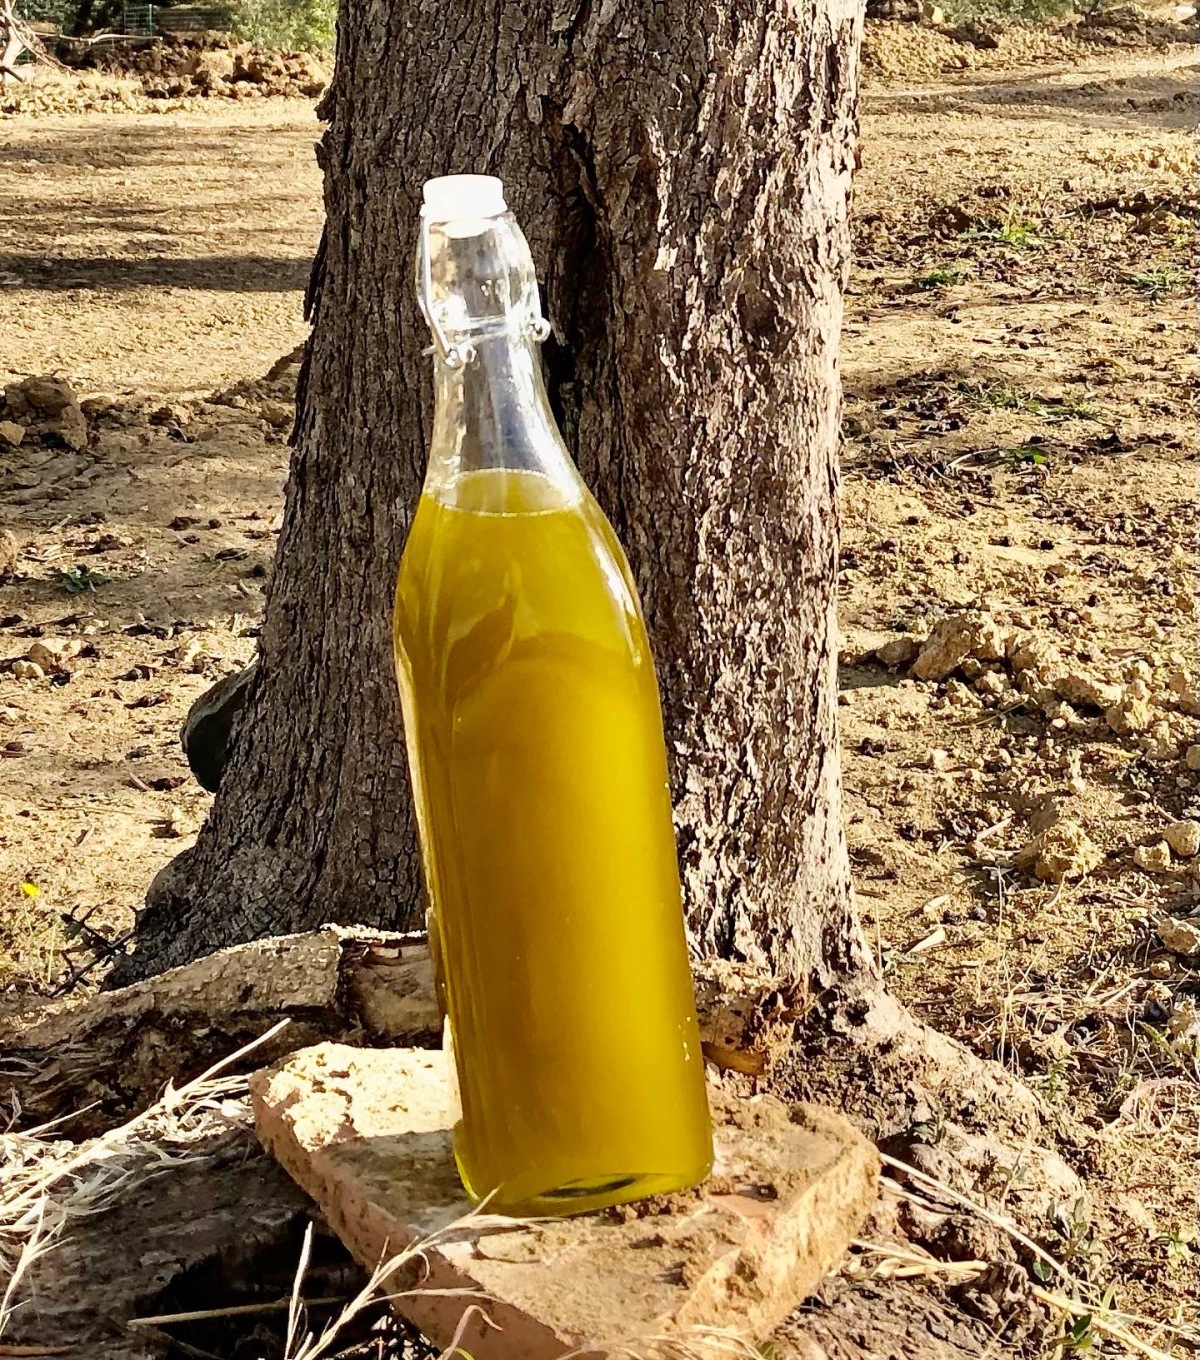 Casa Phoenix’s very own Olive Oil.